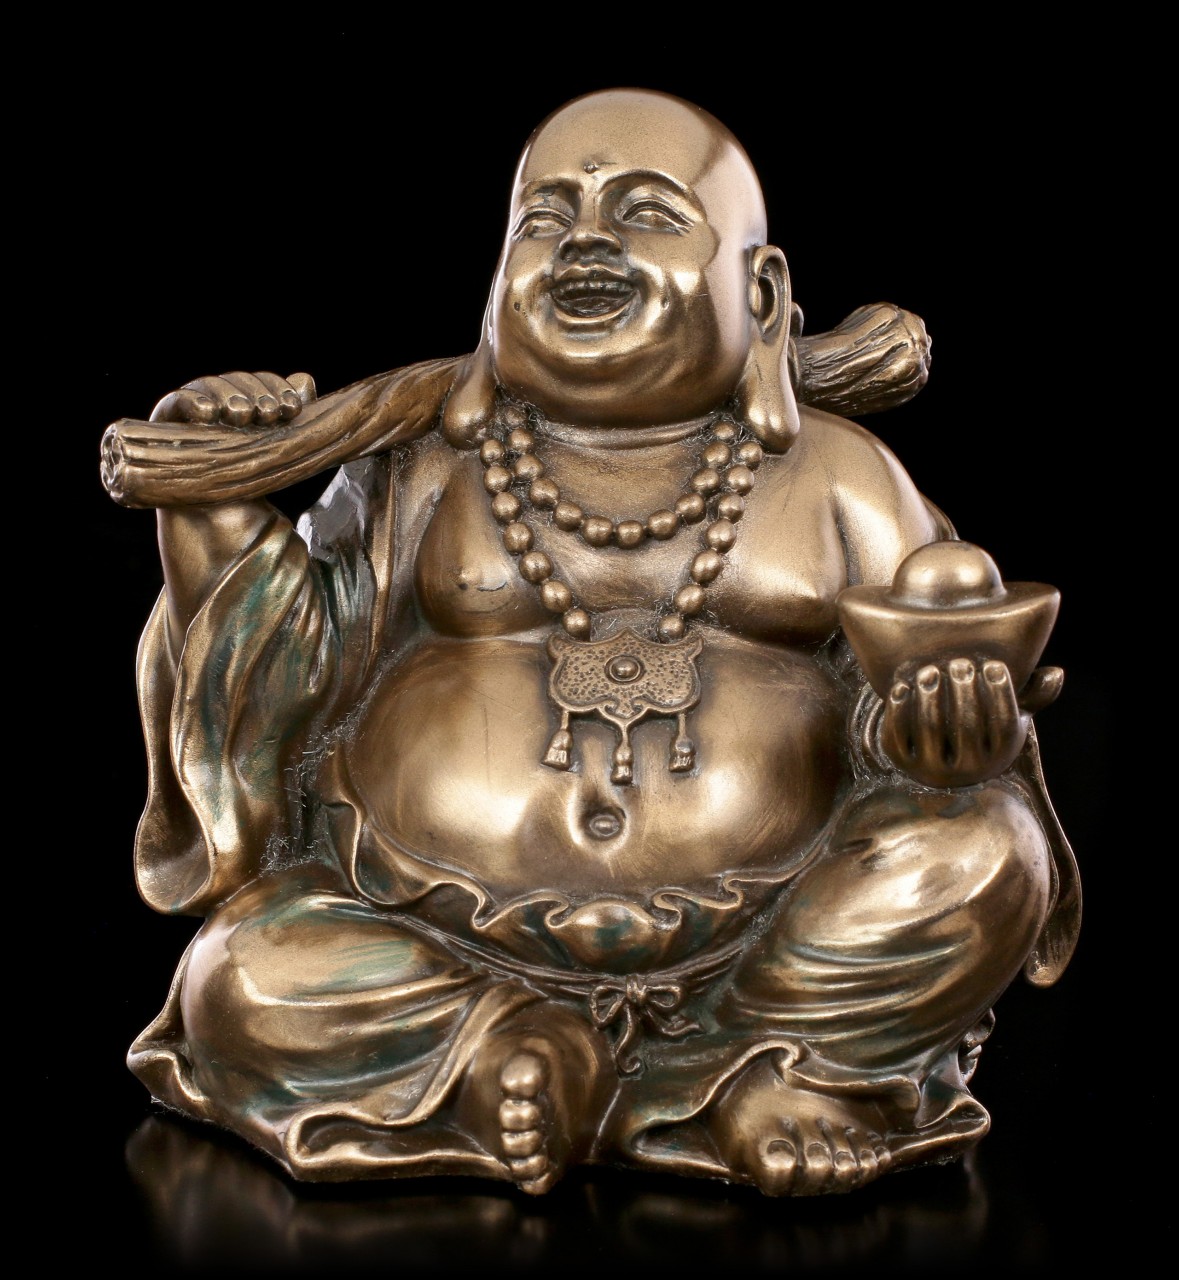 Sitting Buddha Figurine with Gold Nugget